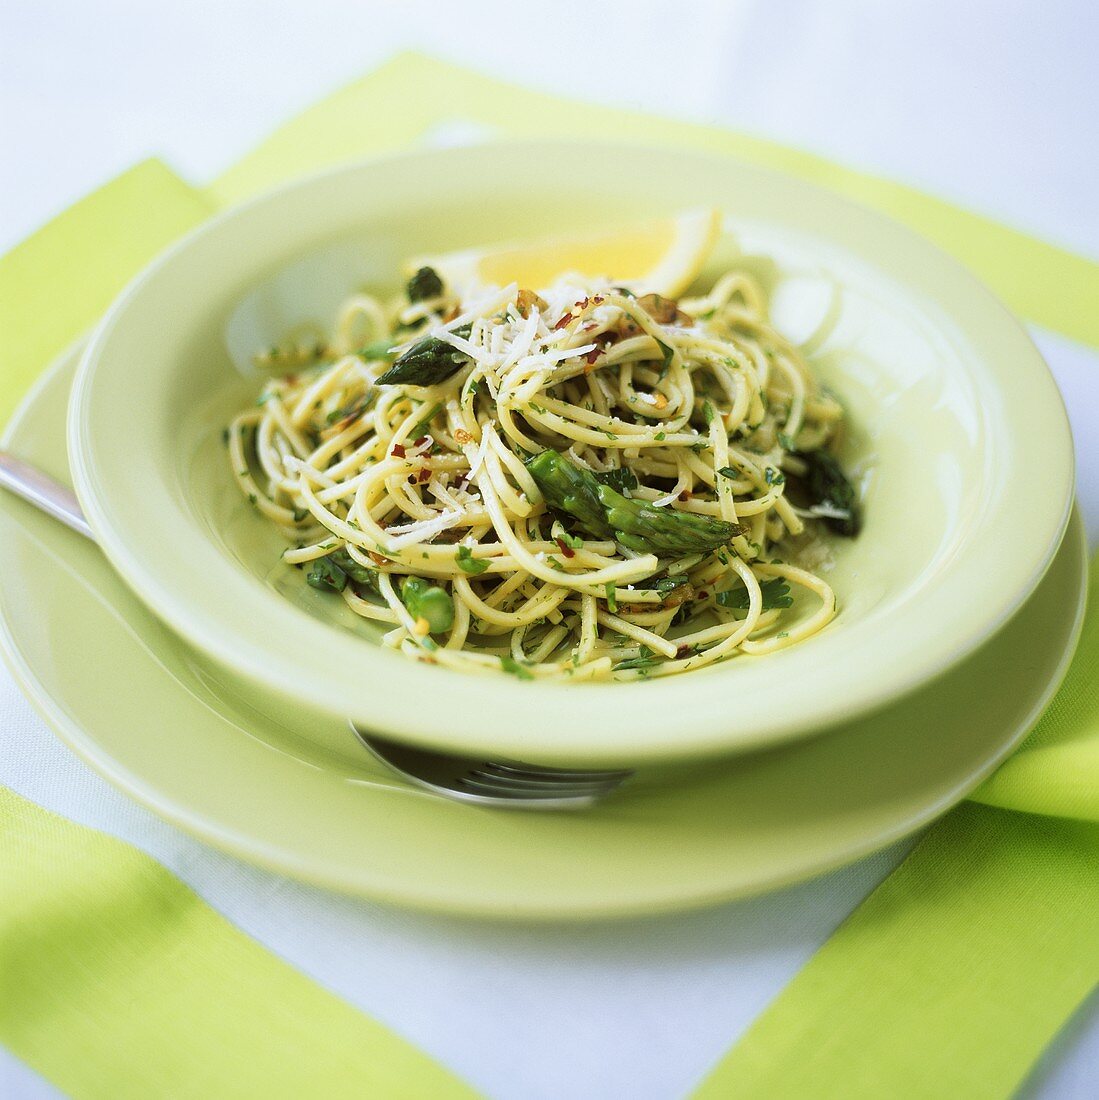 Spaghetti agli asparagi (Spaghetti with green asparagus)